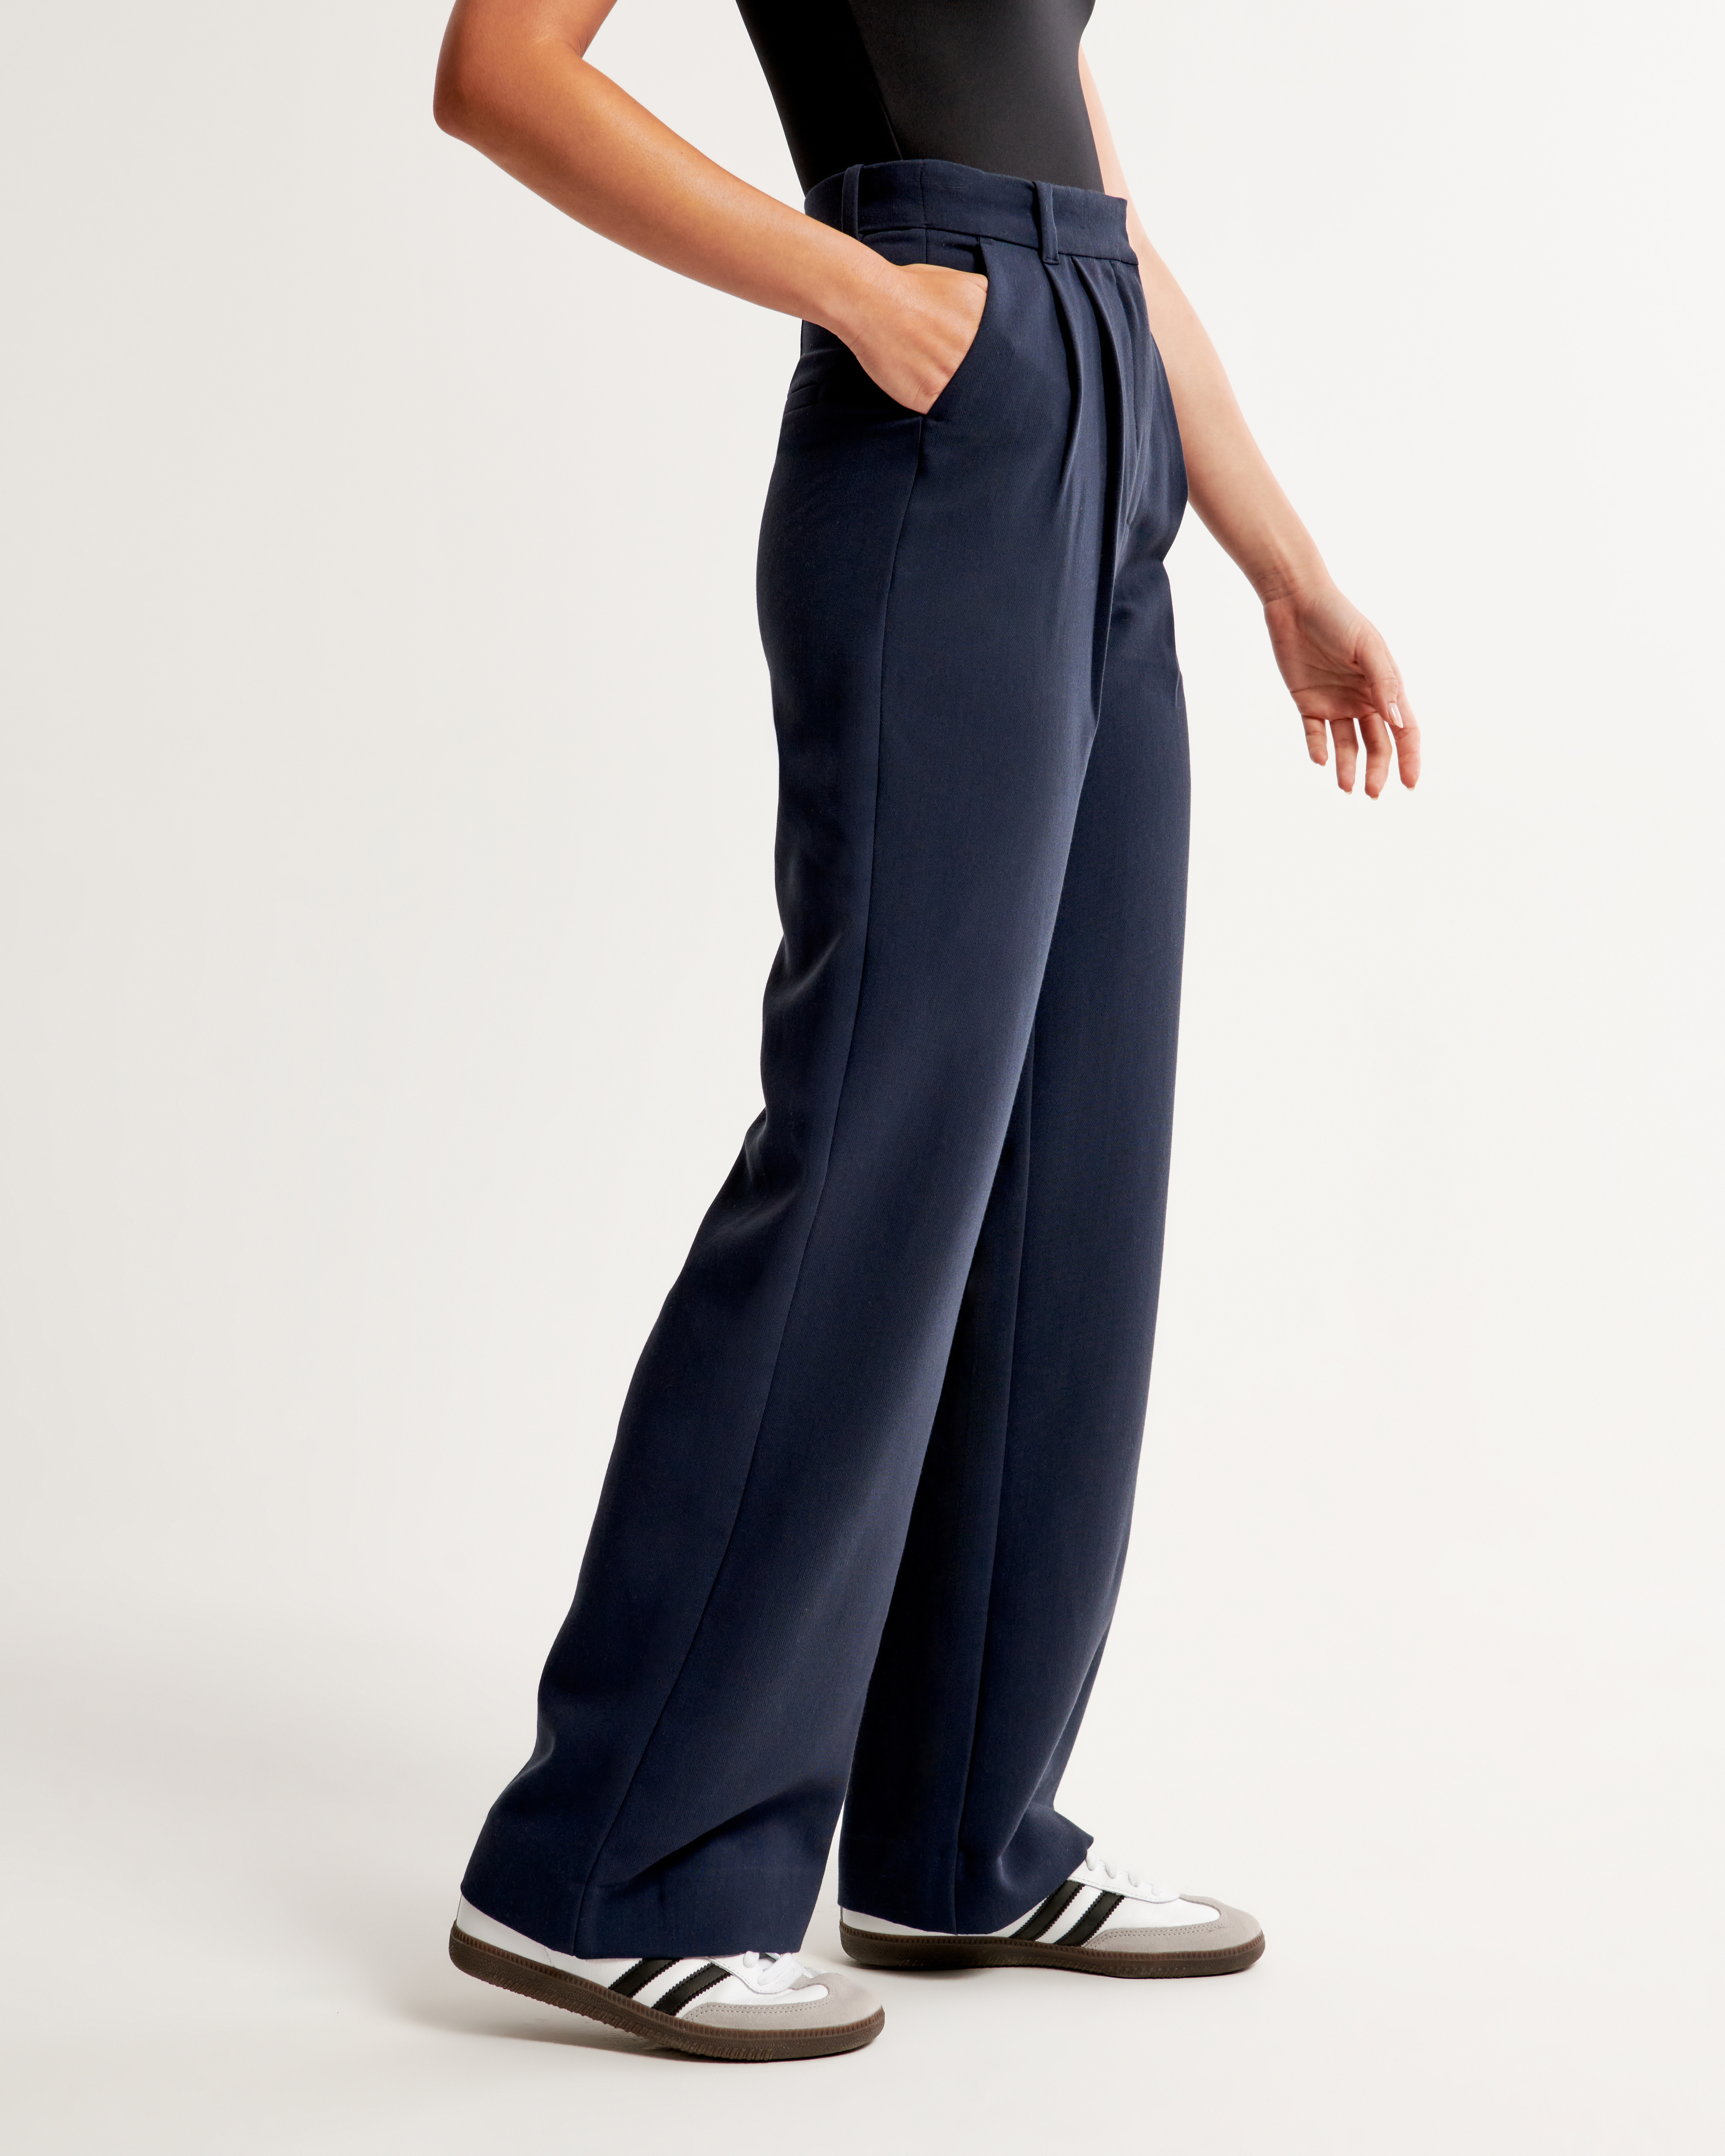 Women's A&F Sloane Tailored Pant | Women's Bottoms | Abercrombie.com